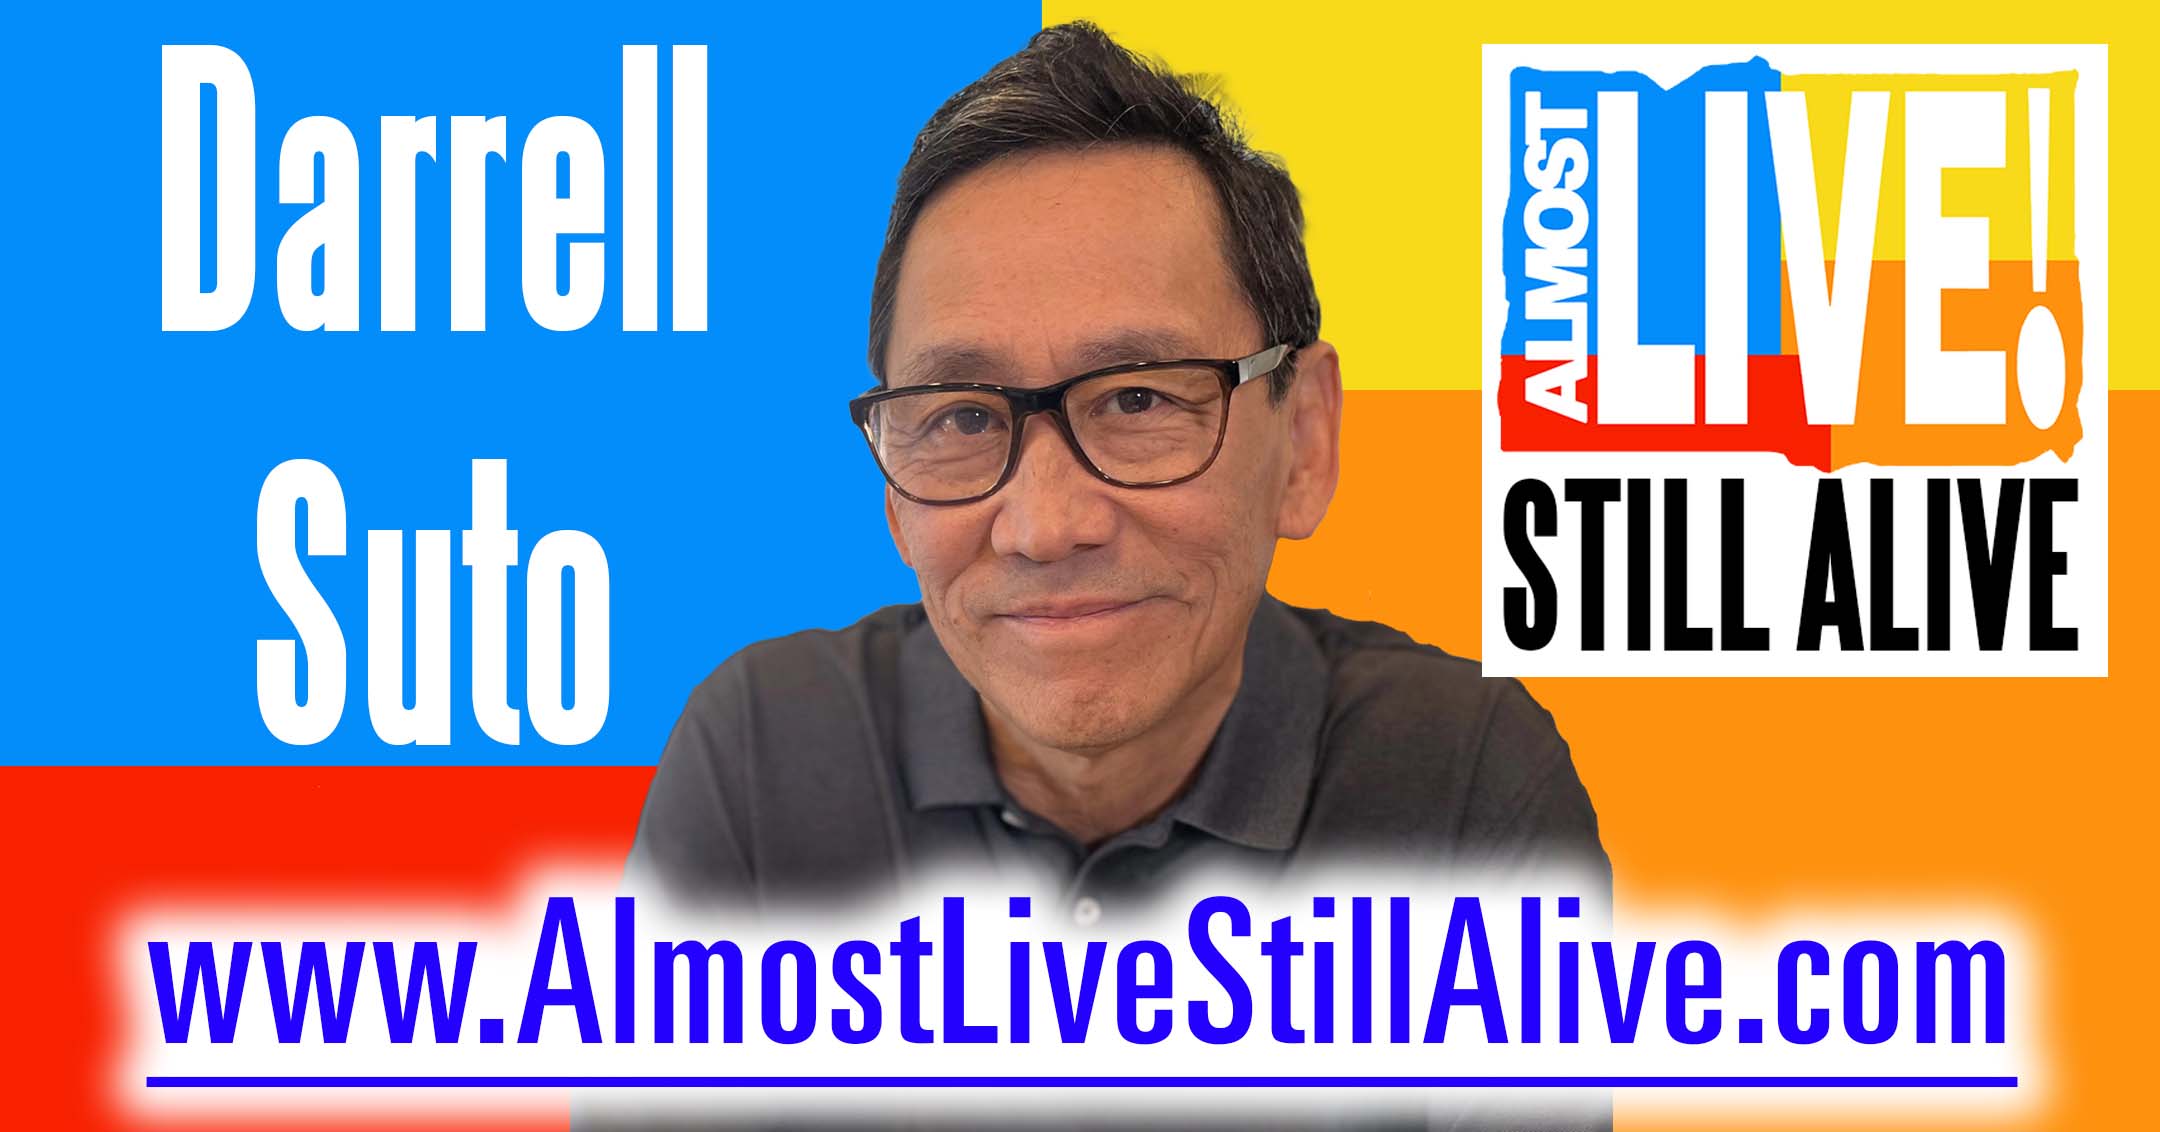 Almost Live!: Still Alive - Darrell Suto | AlmostLiveStillAlive.com